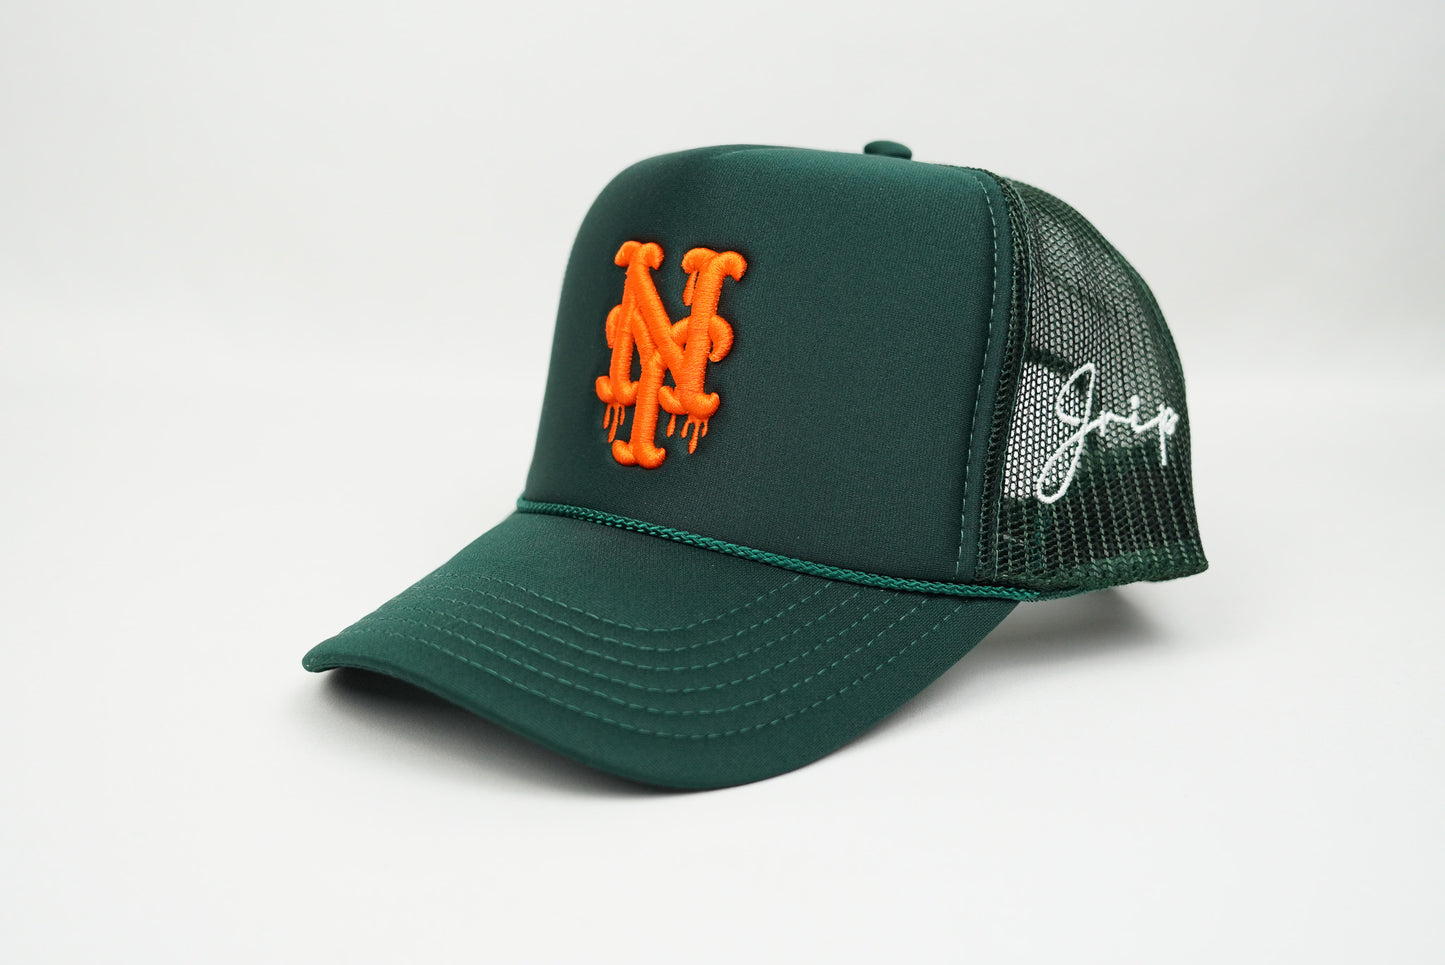 NY Dripping Trucker Hat (GREEN)